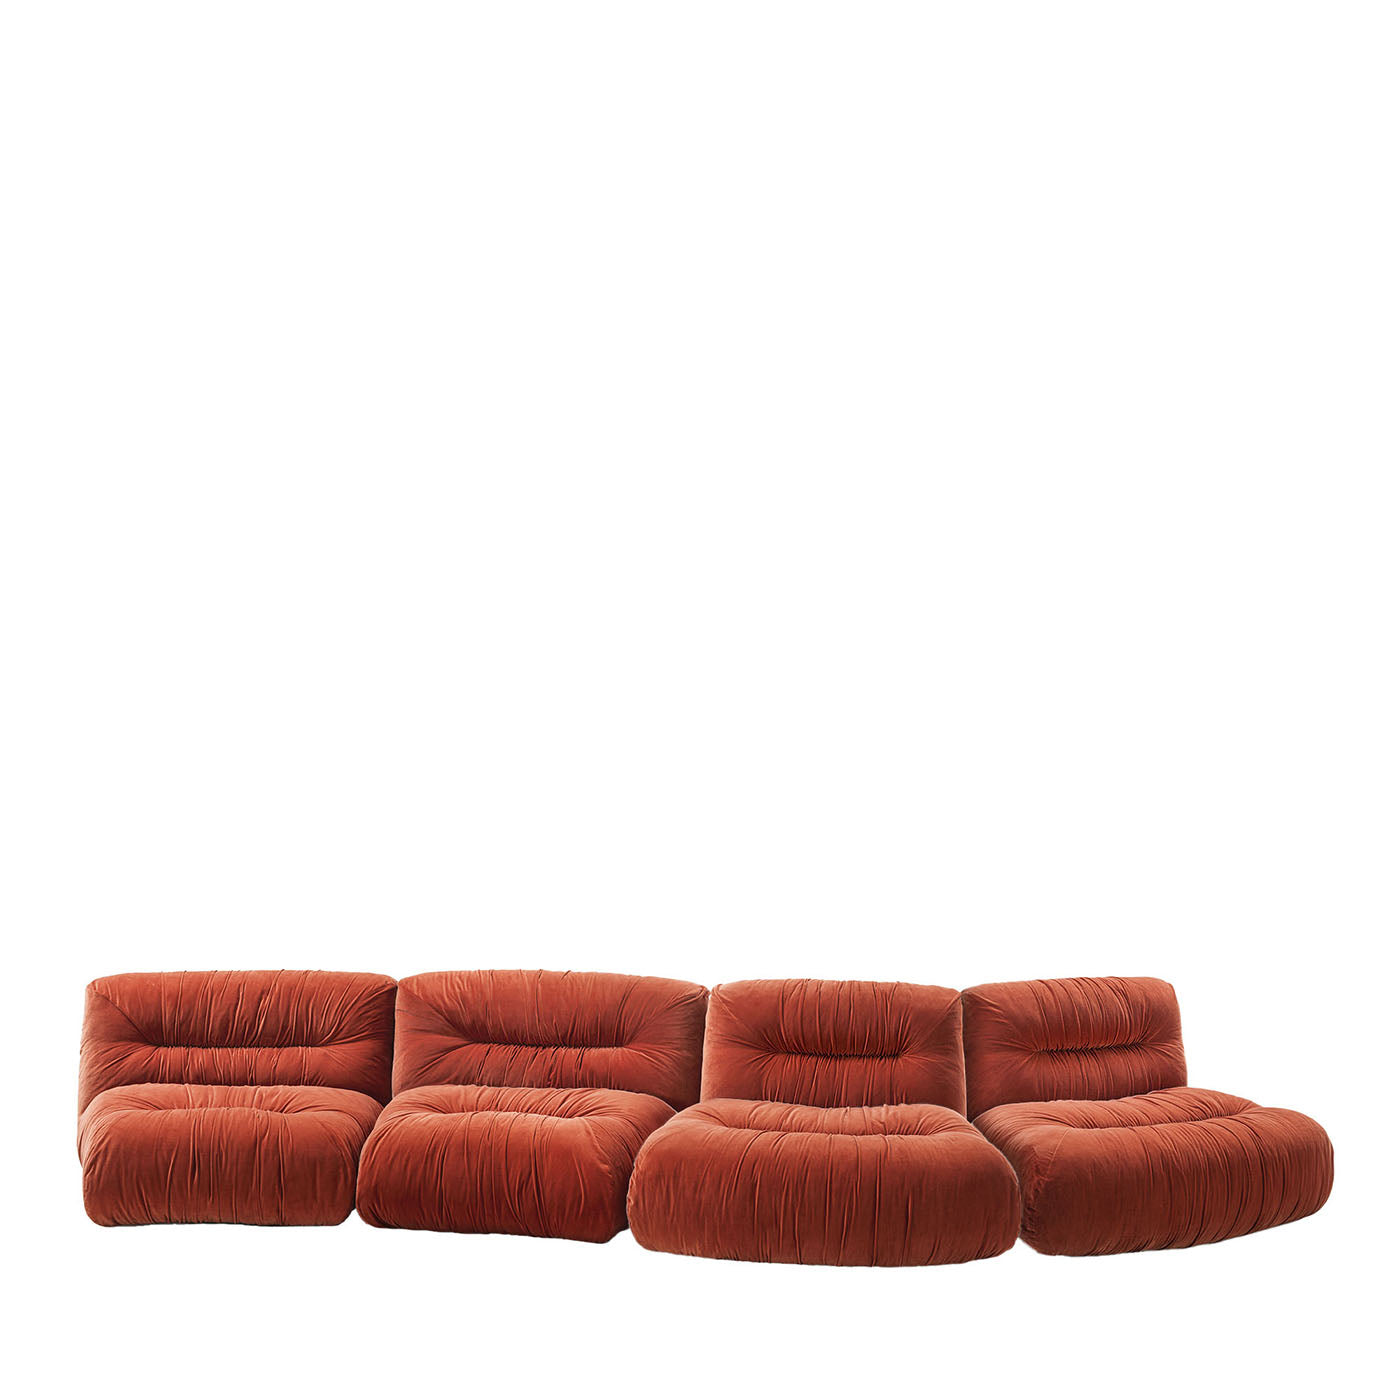 Mambo Modular Orange Fabric Sofa by Lorenza Bozzoli - Main view